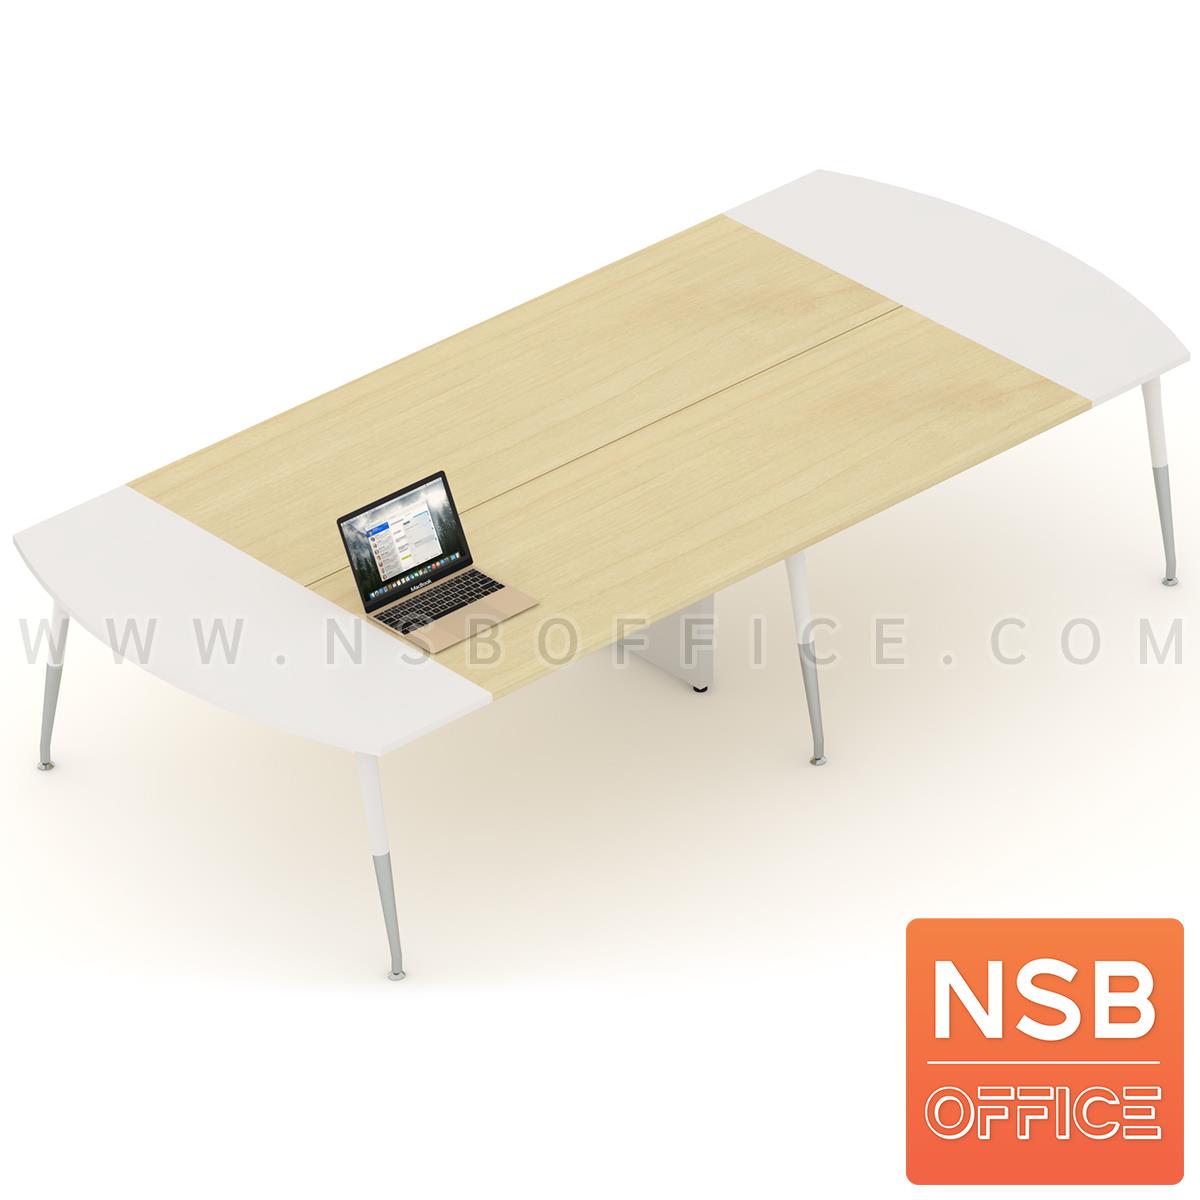 A05A168:โต๊ะประชุมหัวโค้ง ขาปลายเรียว ลึก 150 cm.  ขากลางมีกล่องนำสายไฟ